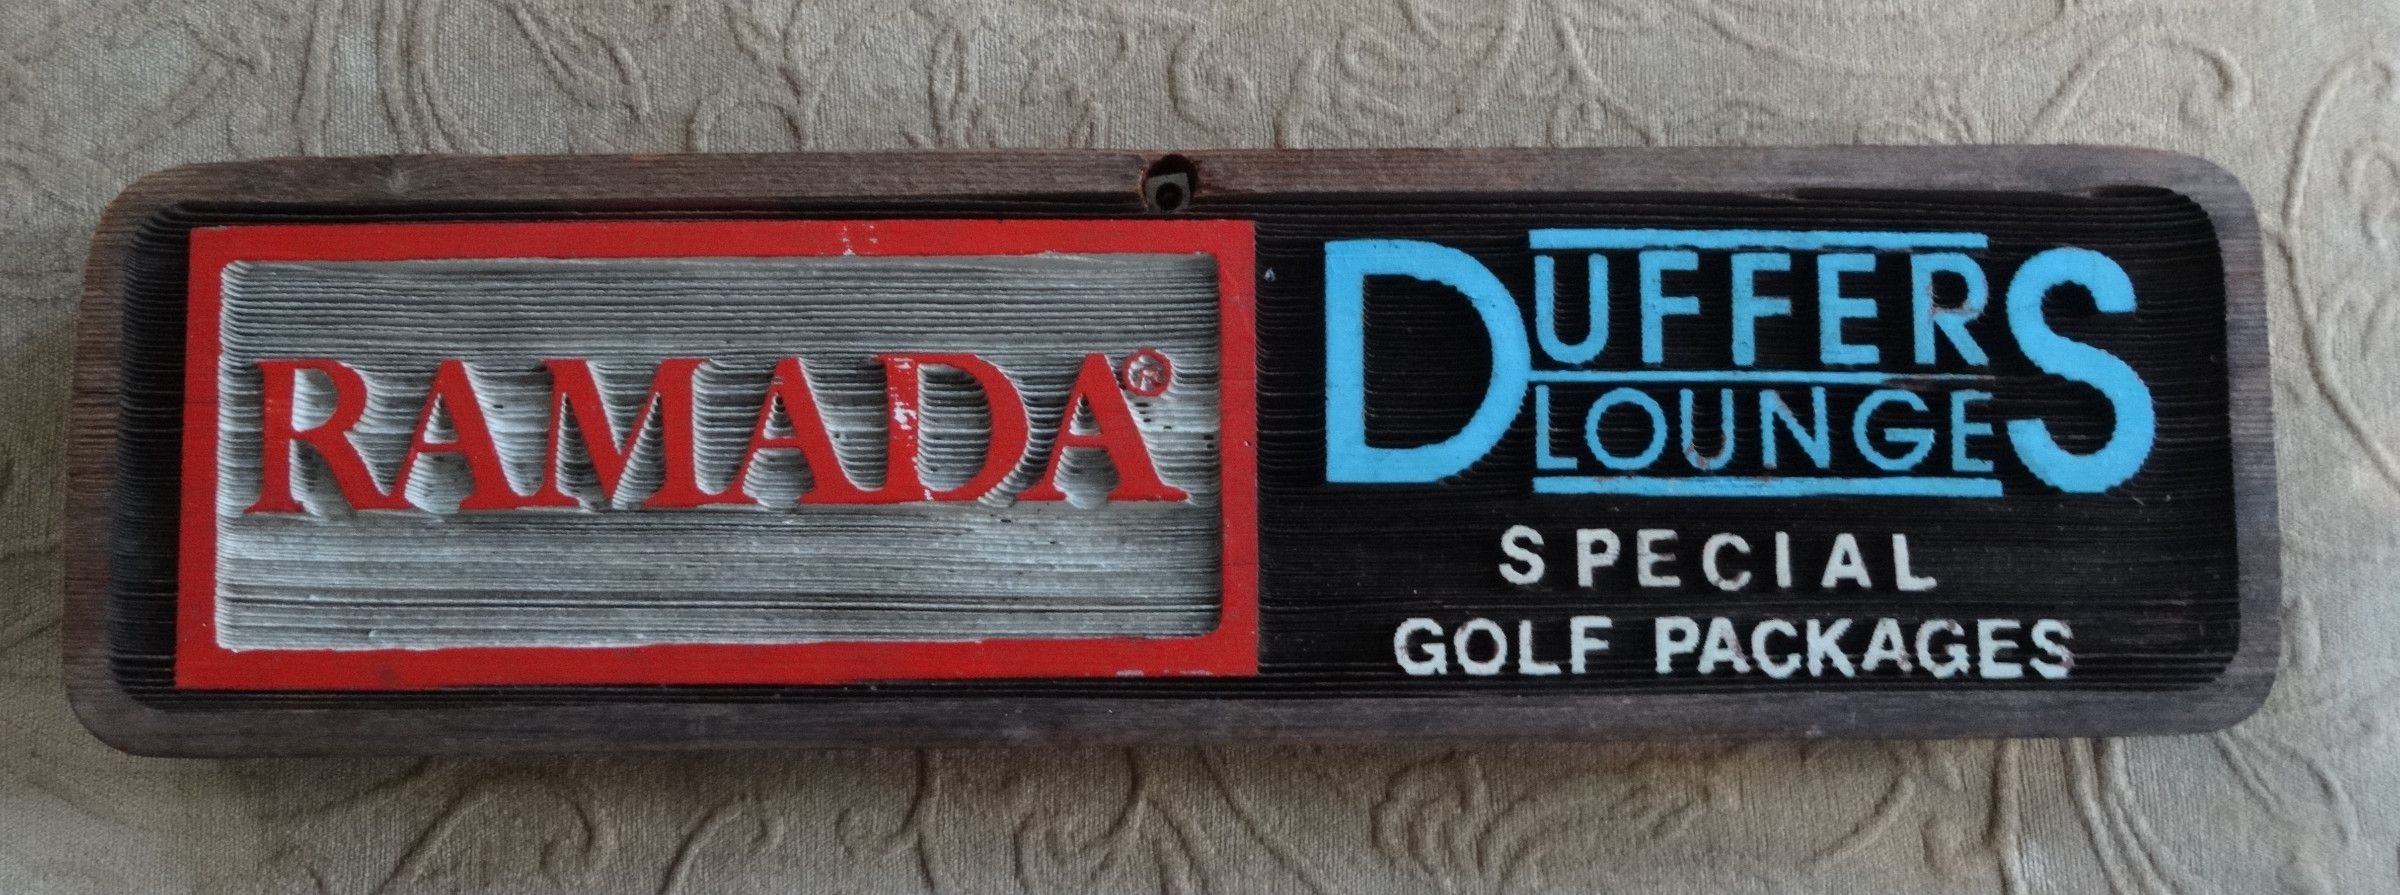 Ramada Inn Hotel Golf Sign Advertising DUFFERS LOUNGE Patriotic Colors